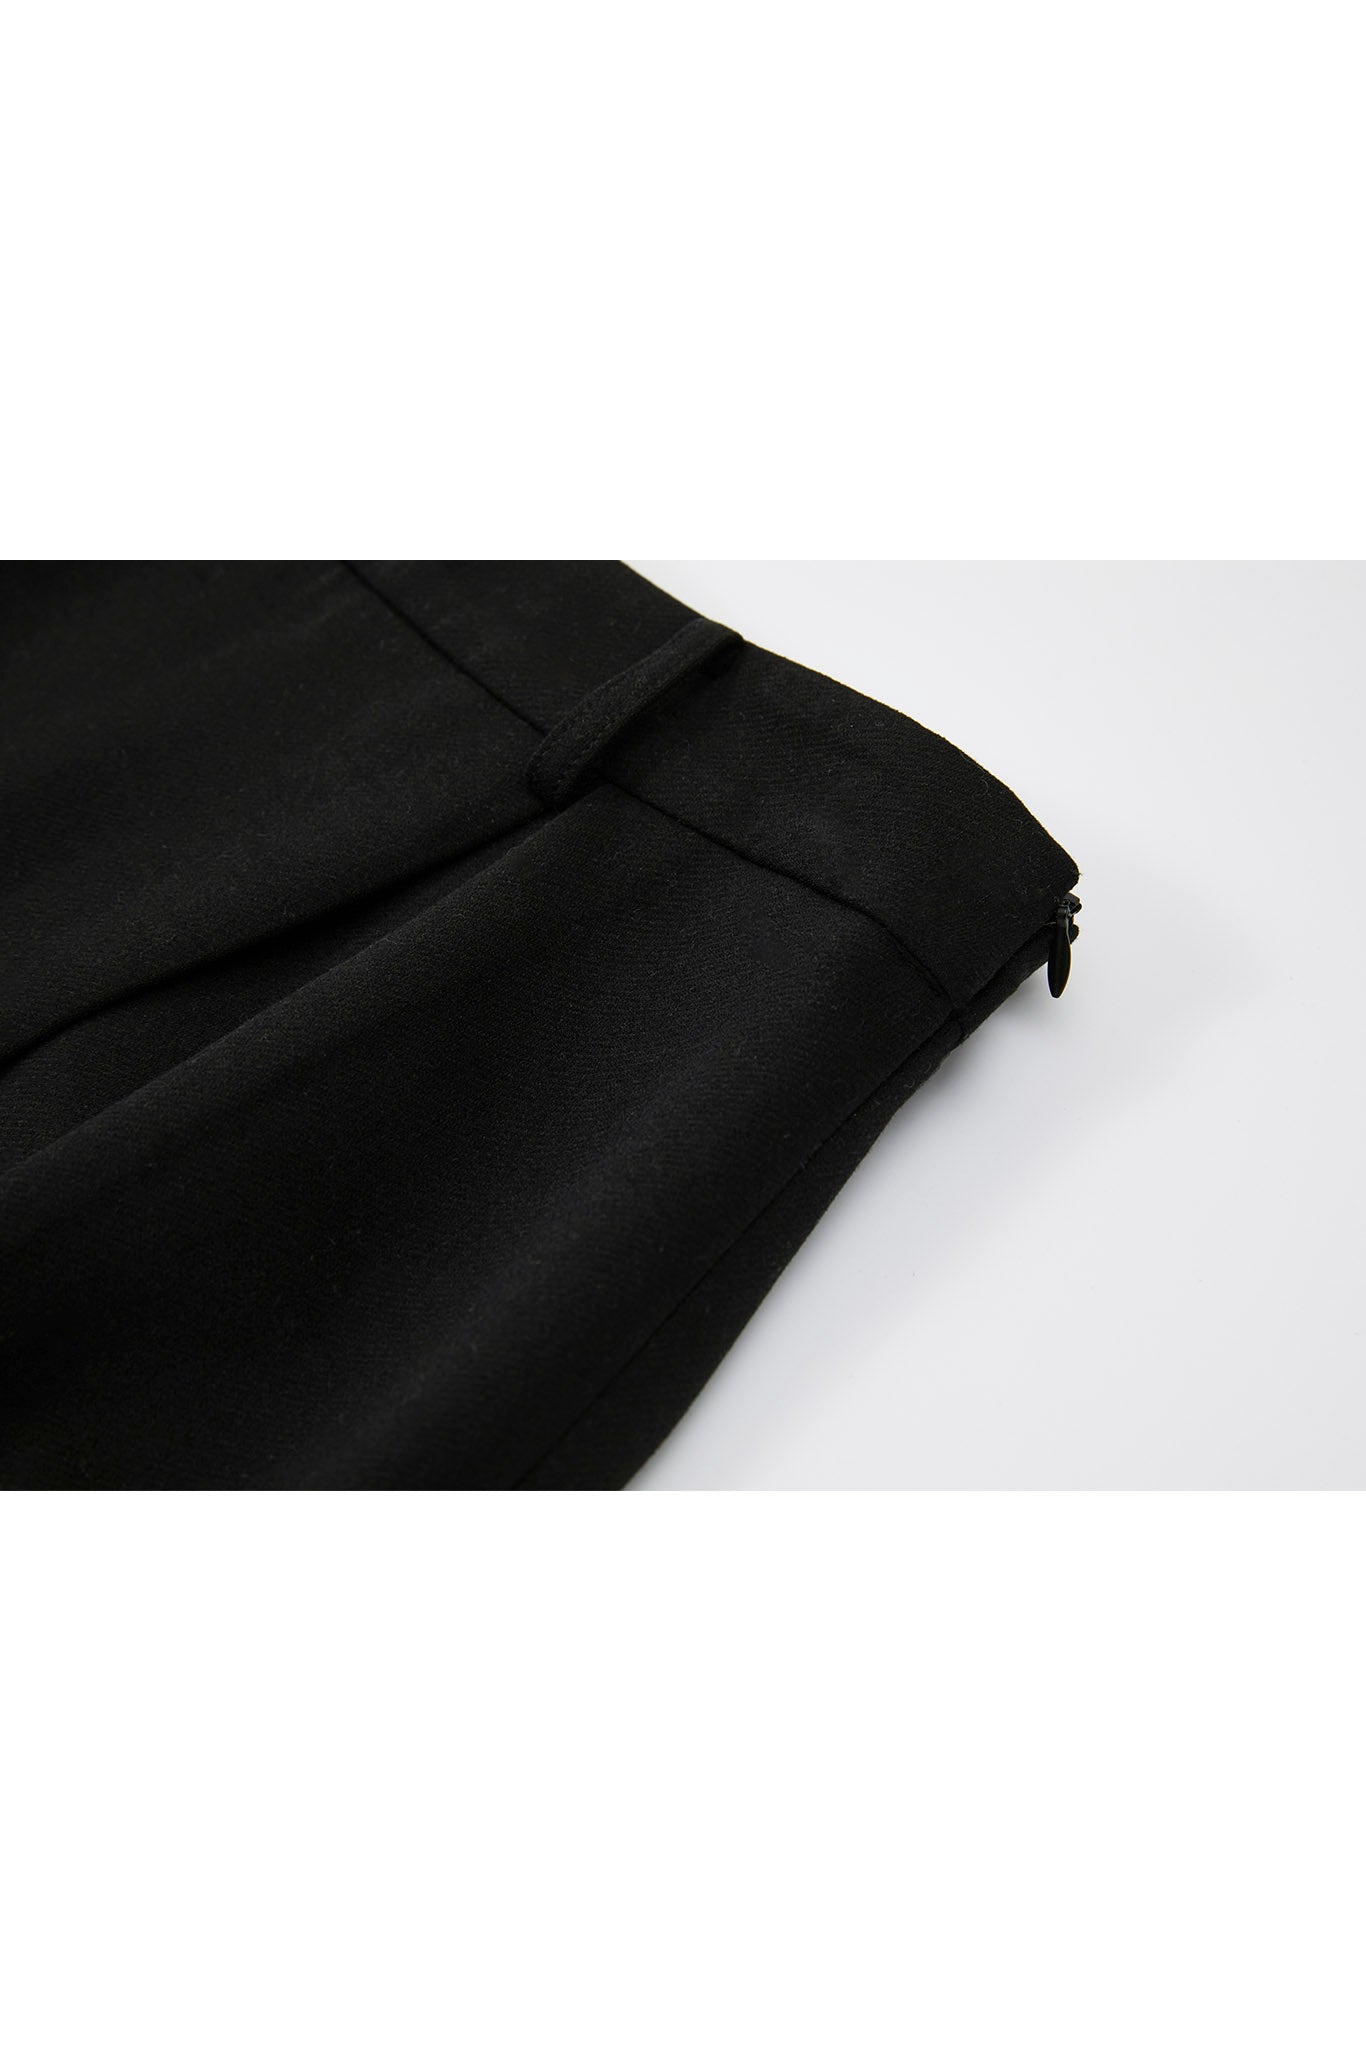 [tageechita] Wrap style back slit skirt